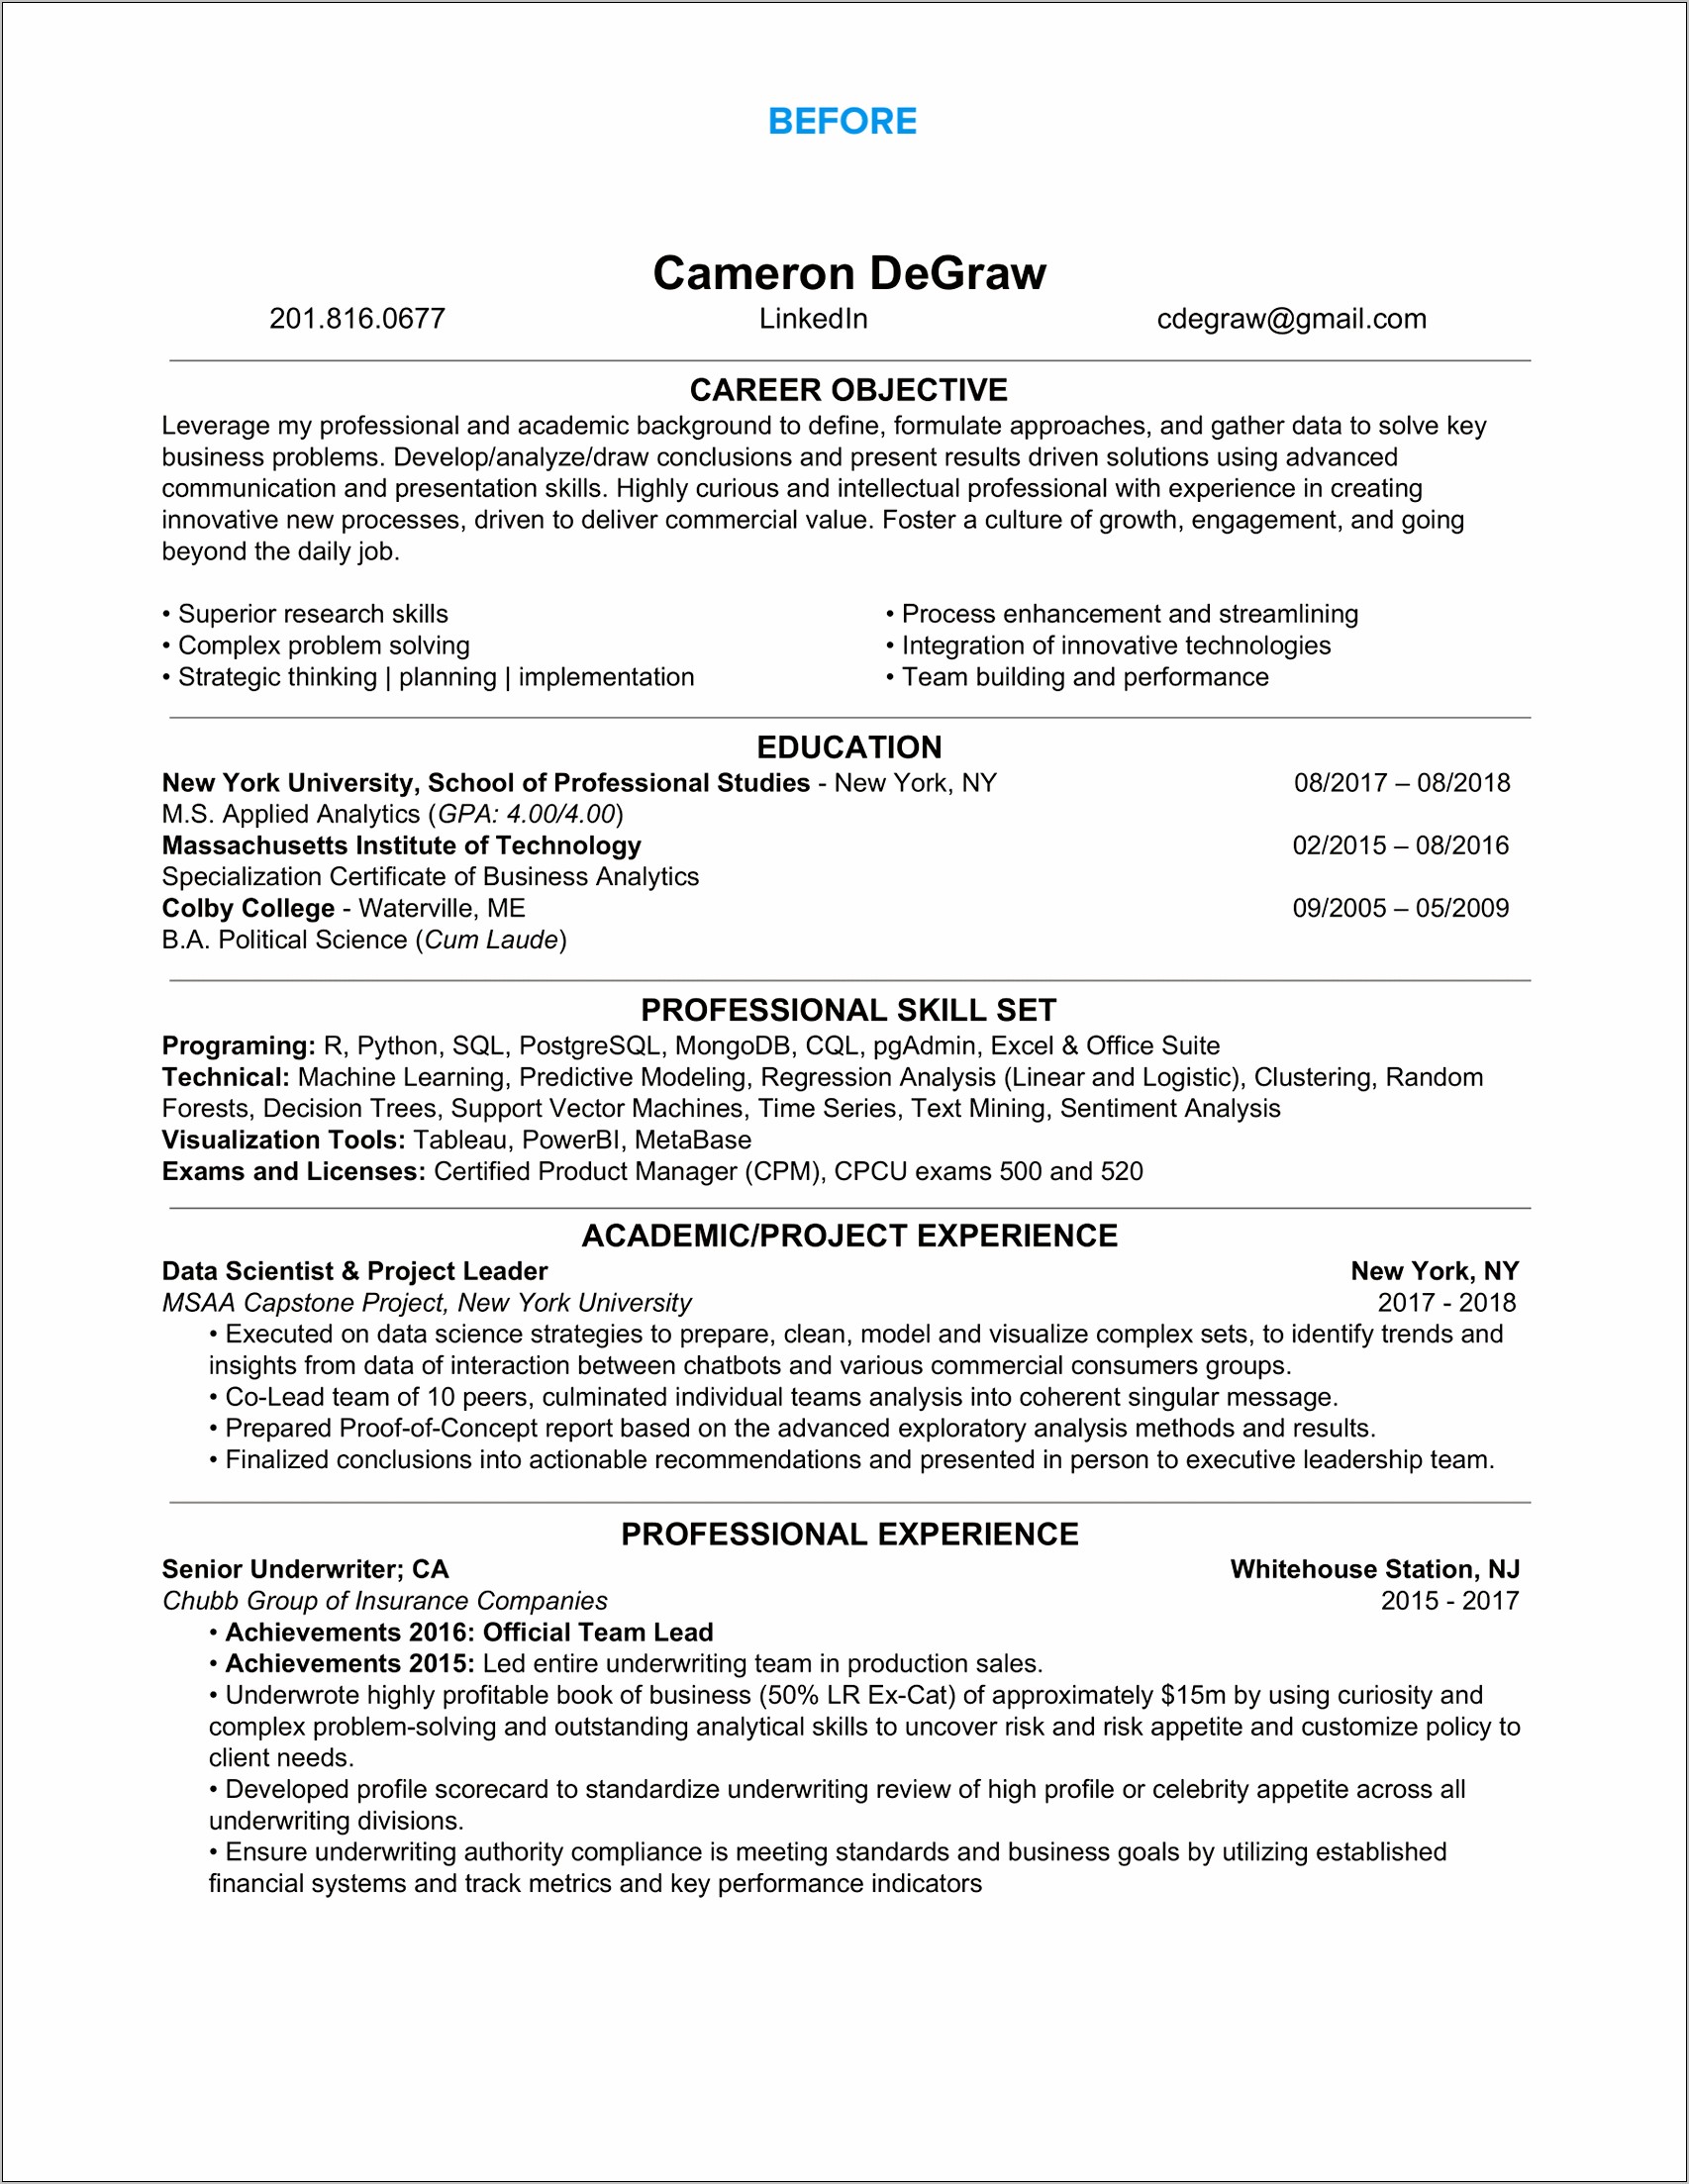 Cameron School Of Business Resume Format